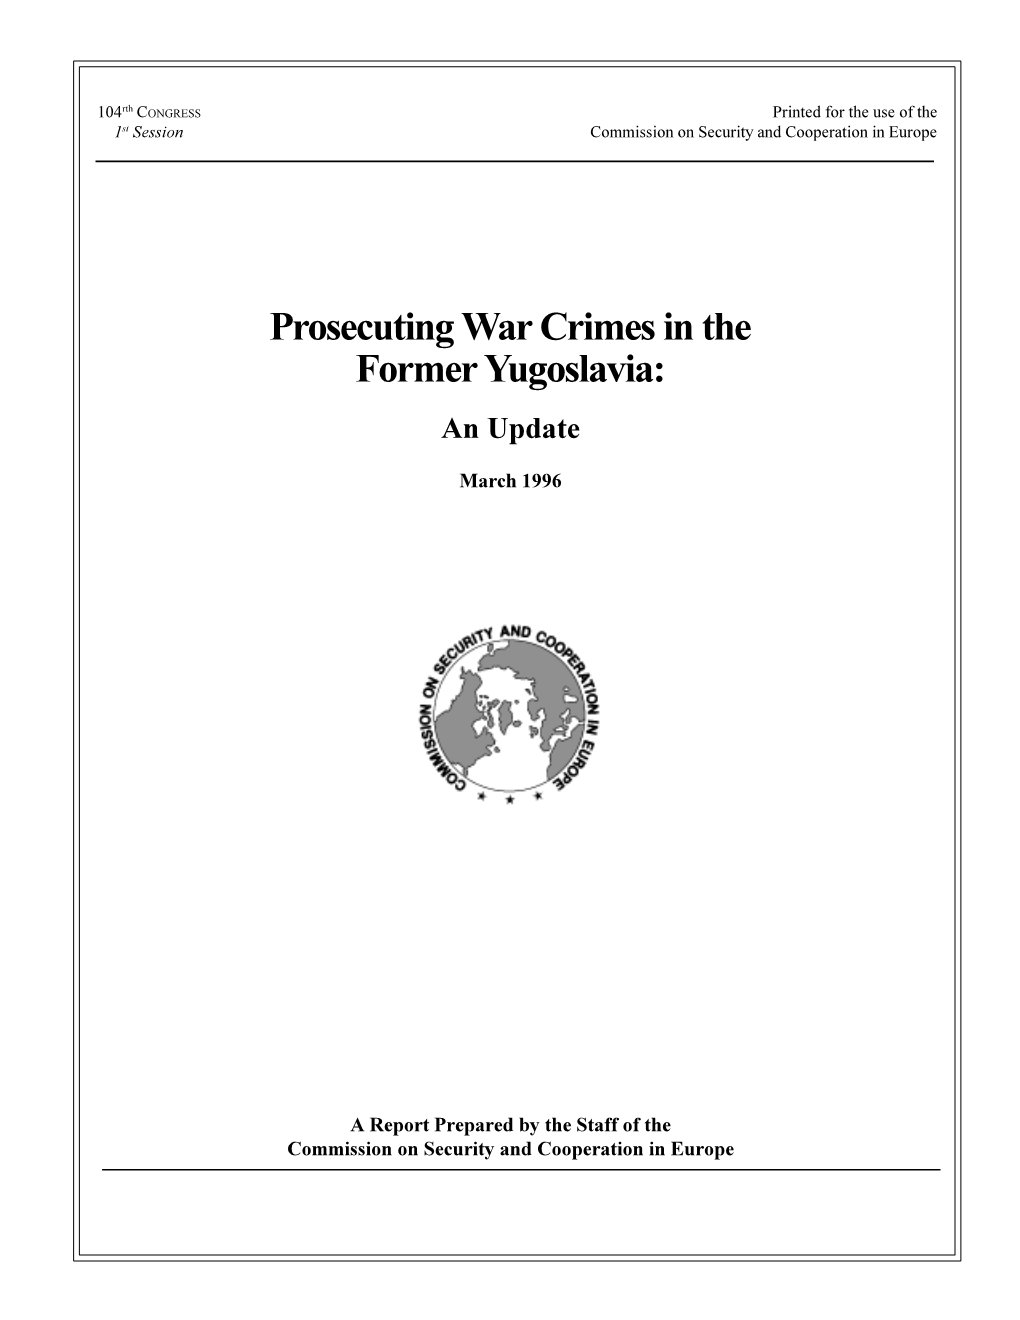 Prosecuting War Crimes in the Former Yugoslavia: an Update